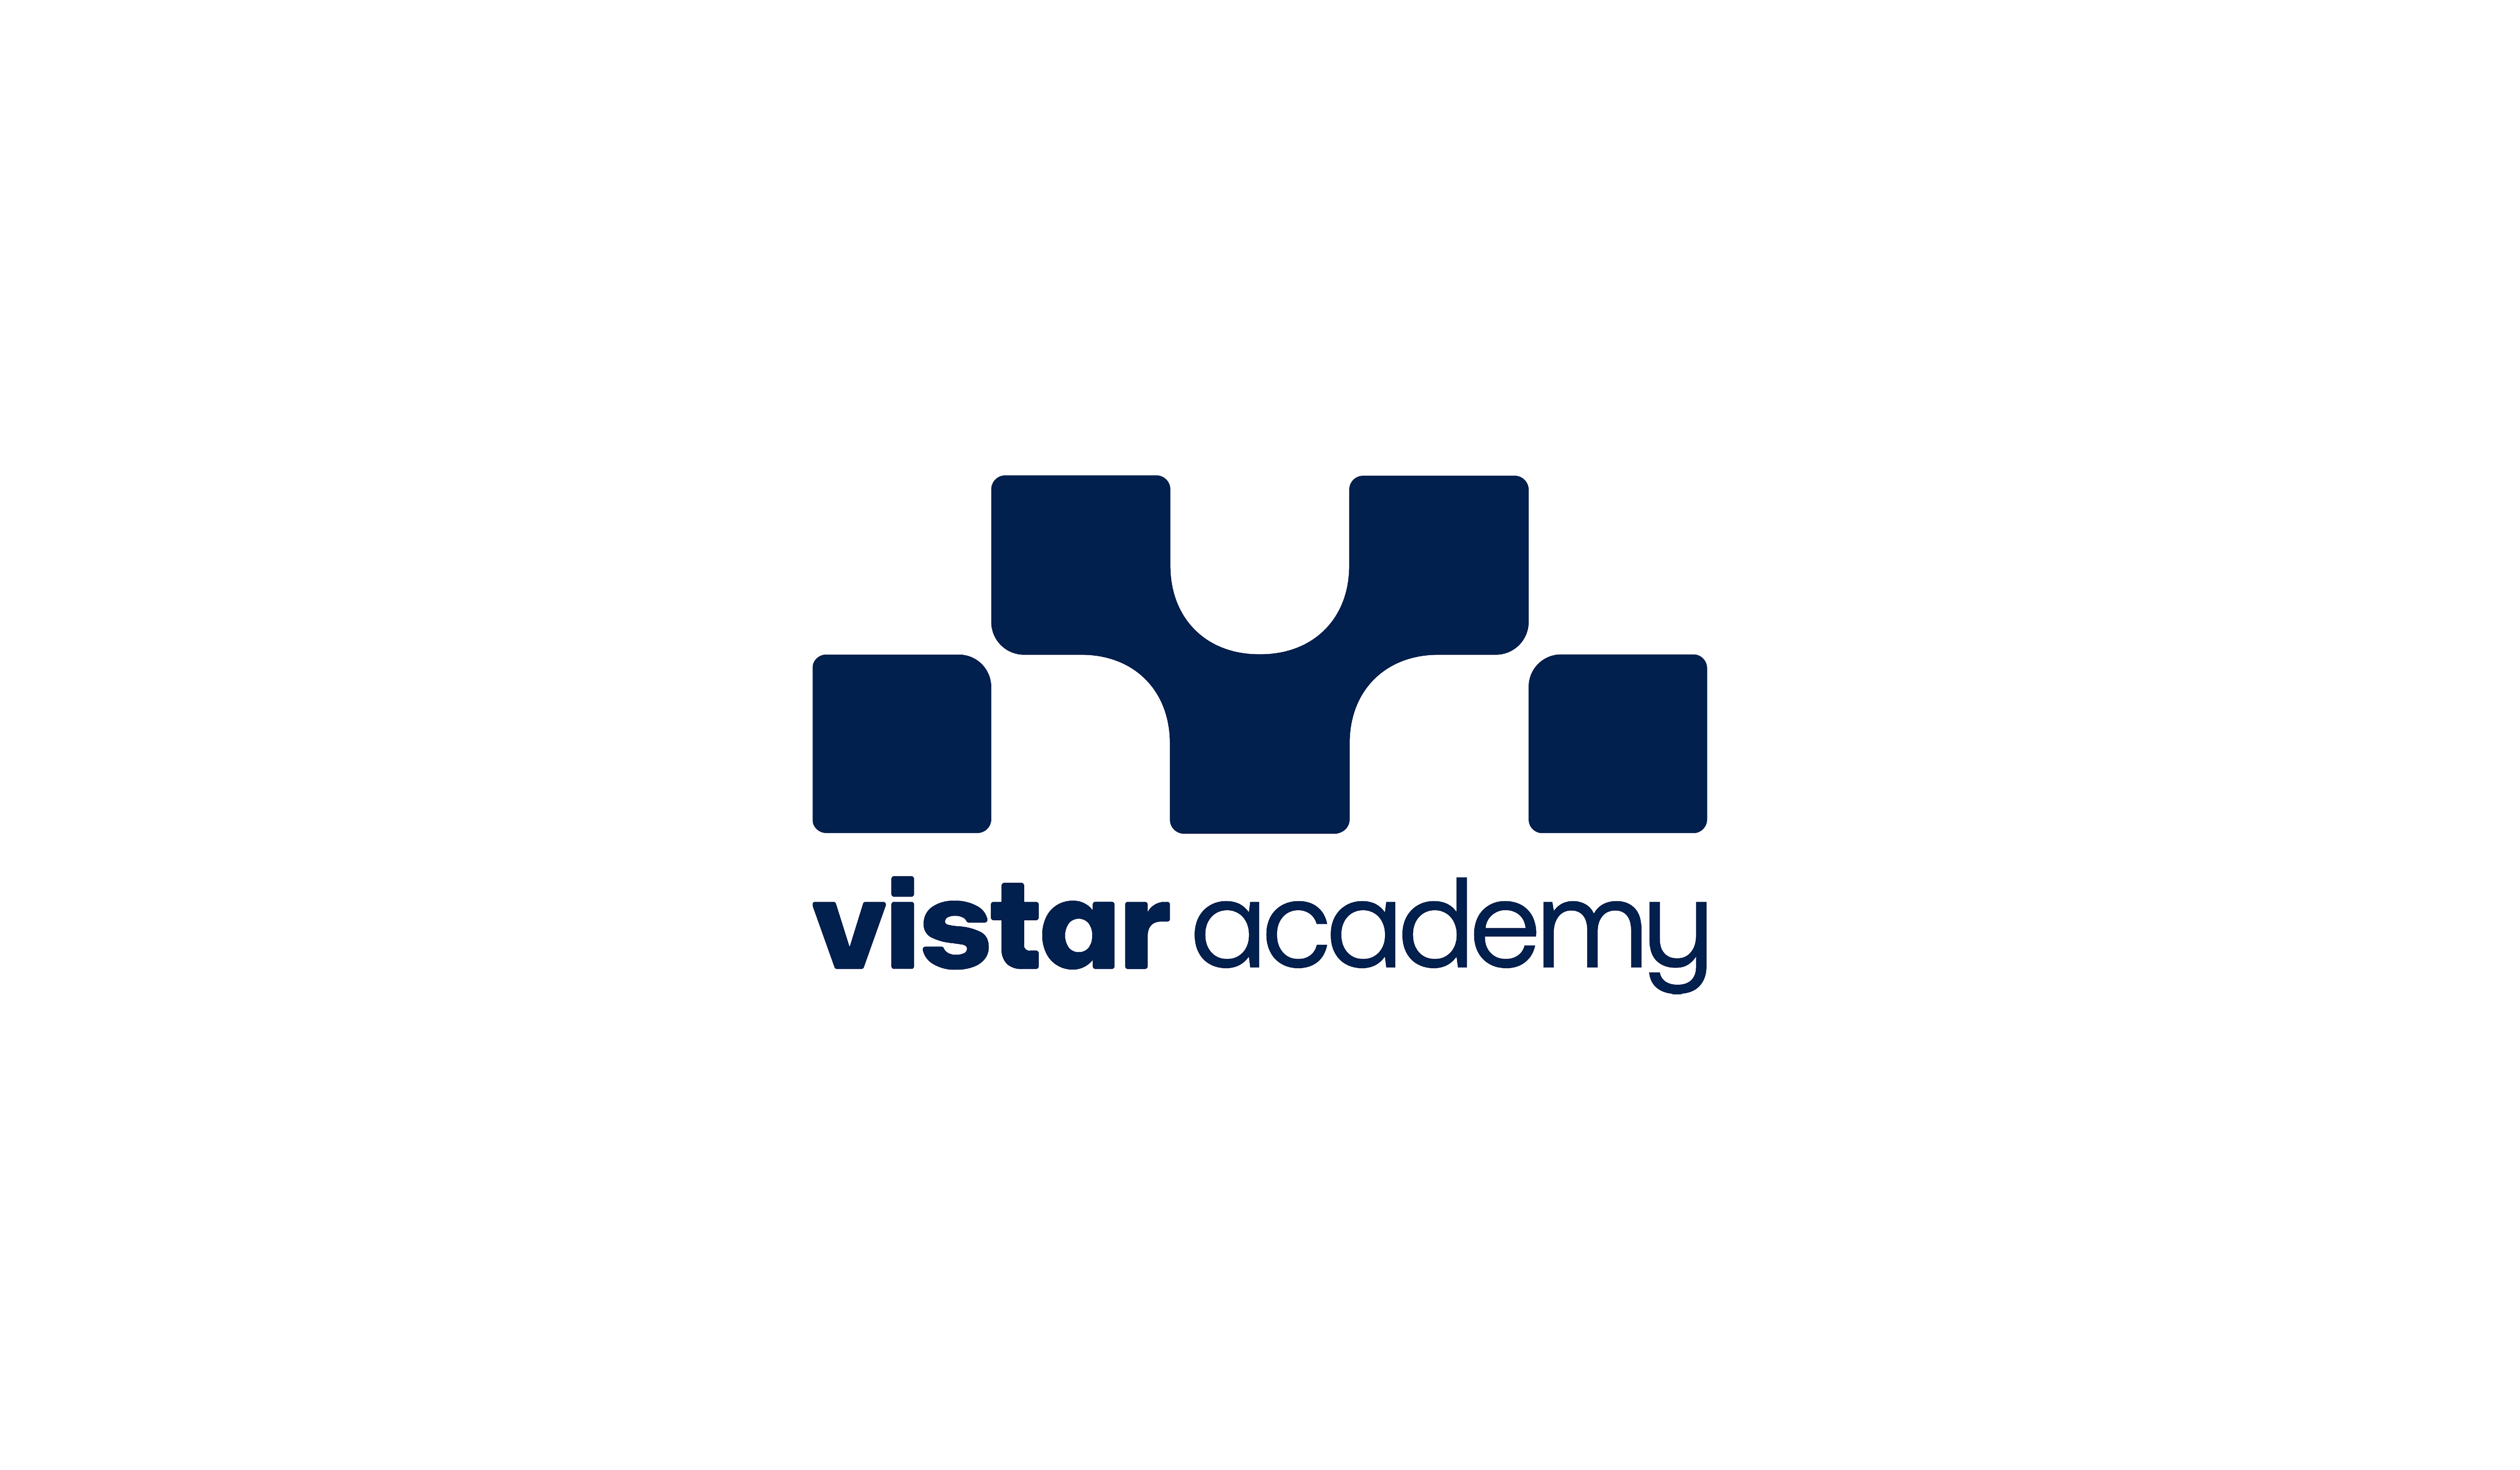 VistarAcademy-Stacked-blue-logo-1200x700-2